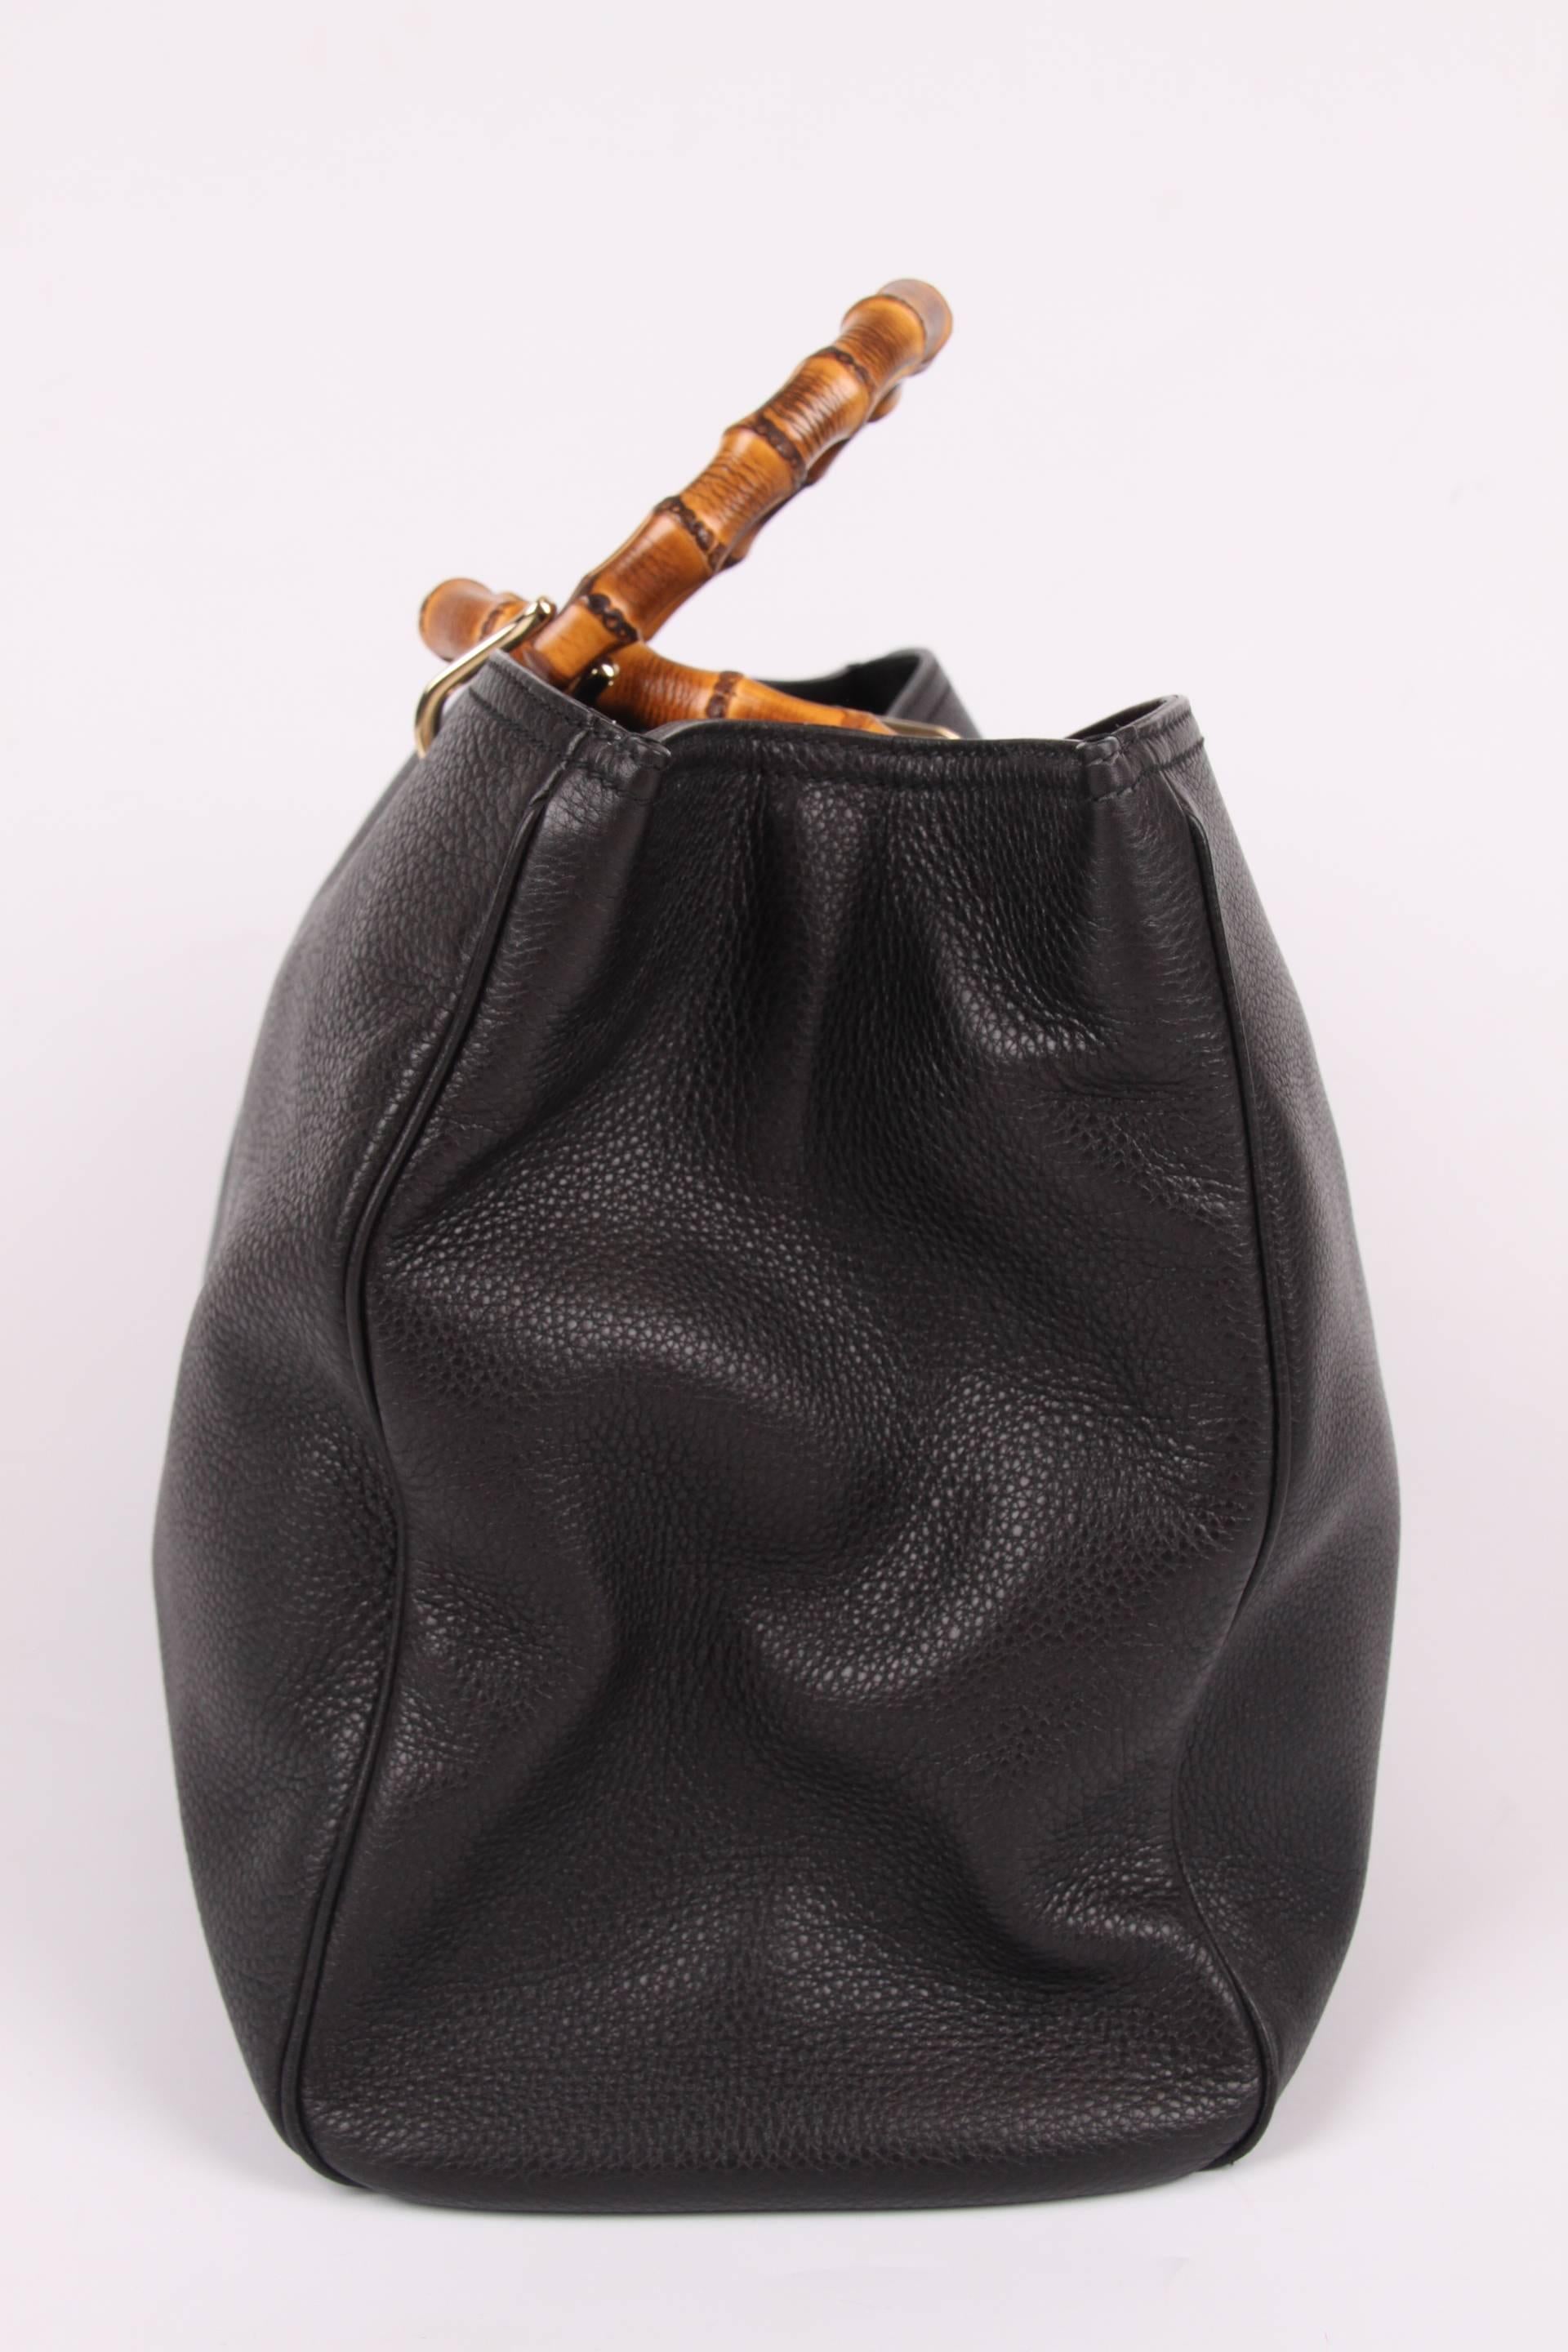 Gucci Bamboo Shopper Tote Bag L - black leather  3